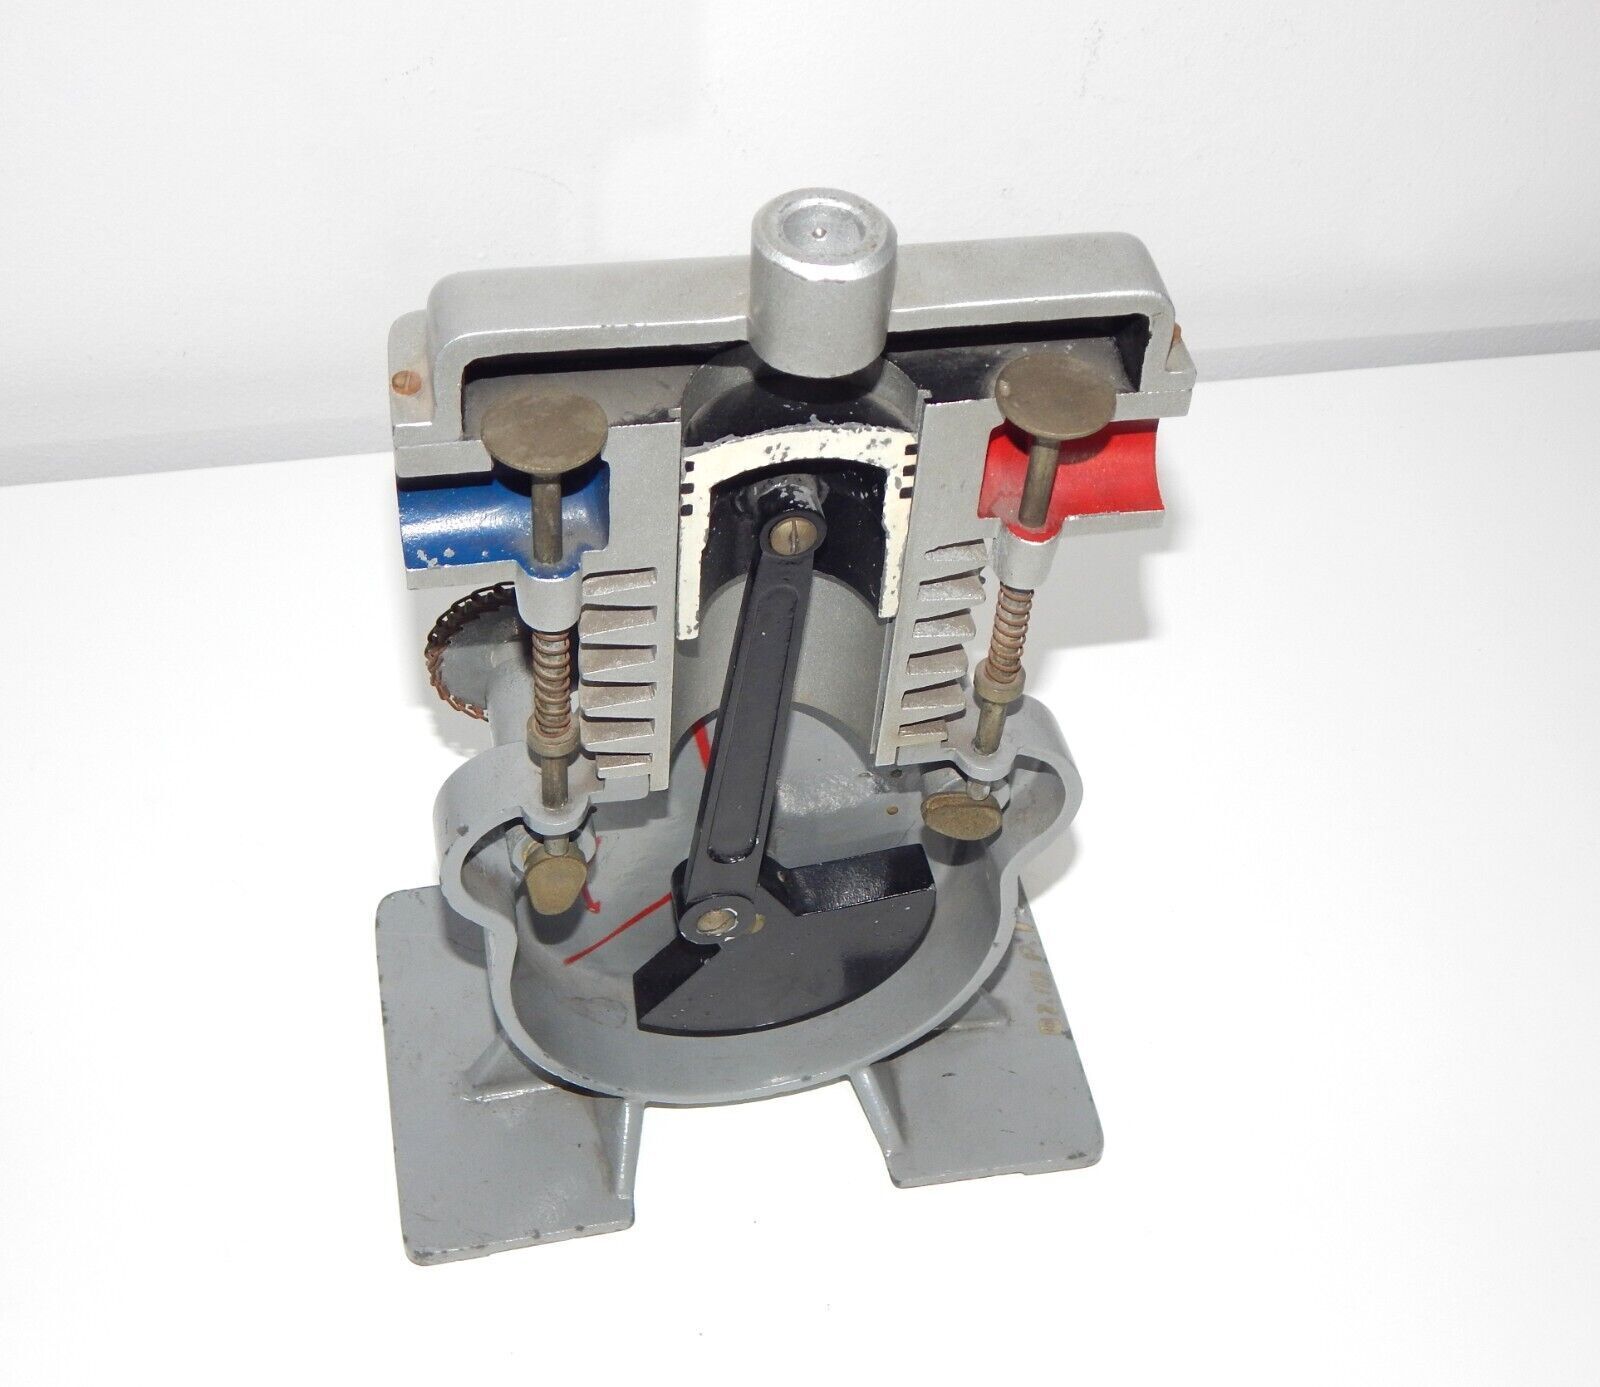 used Old driving school model four-stroke engine engine demonstration model...